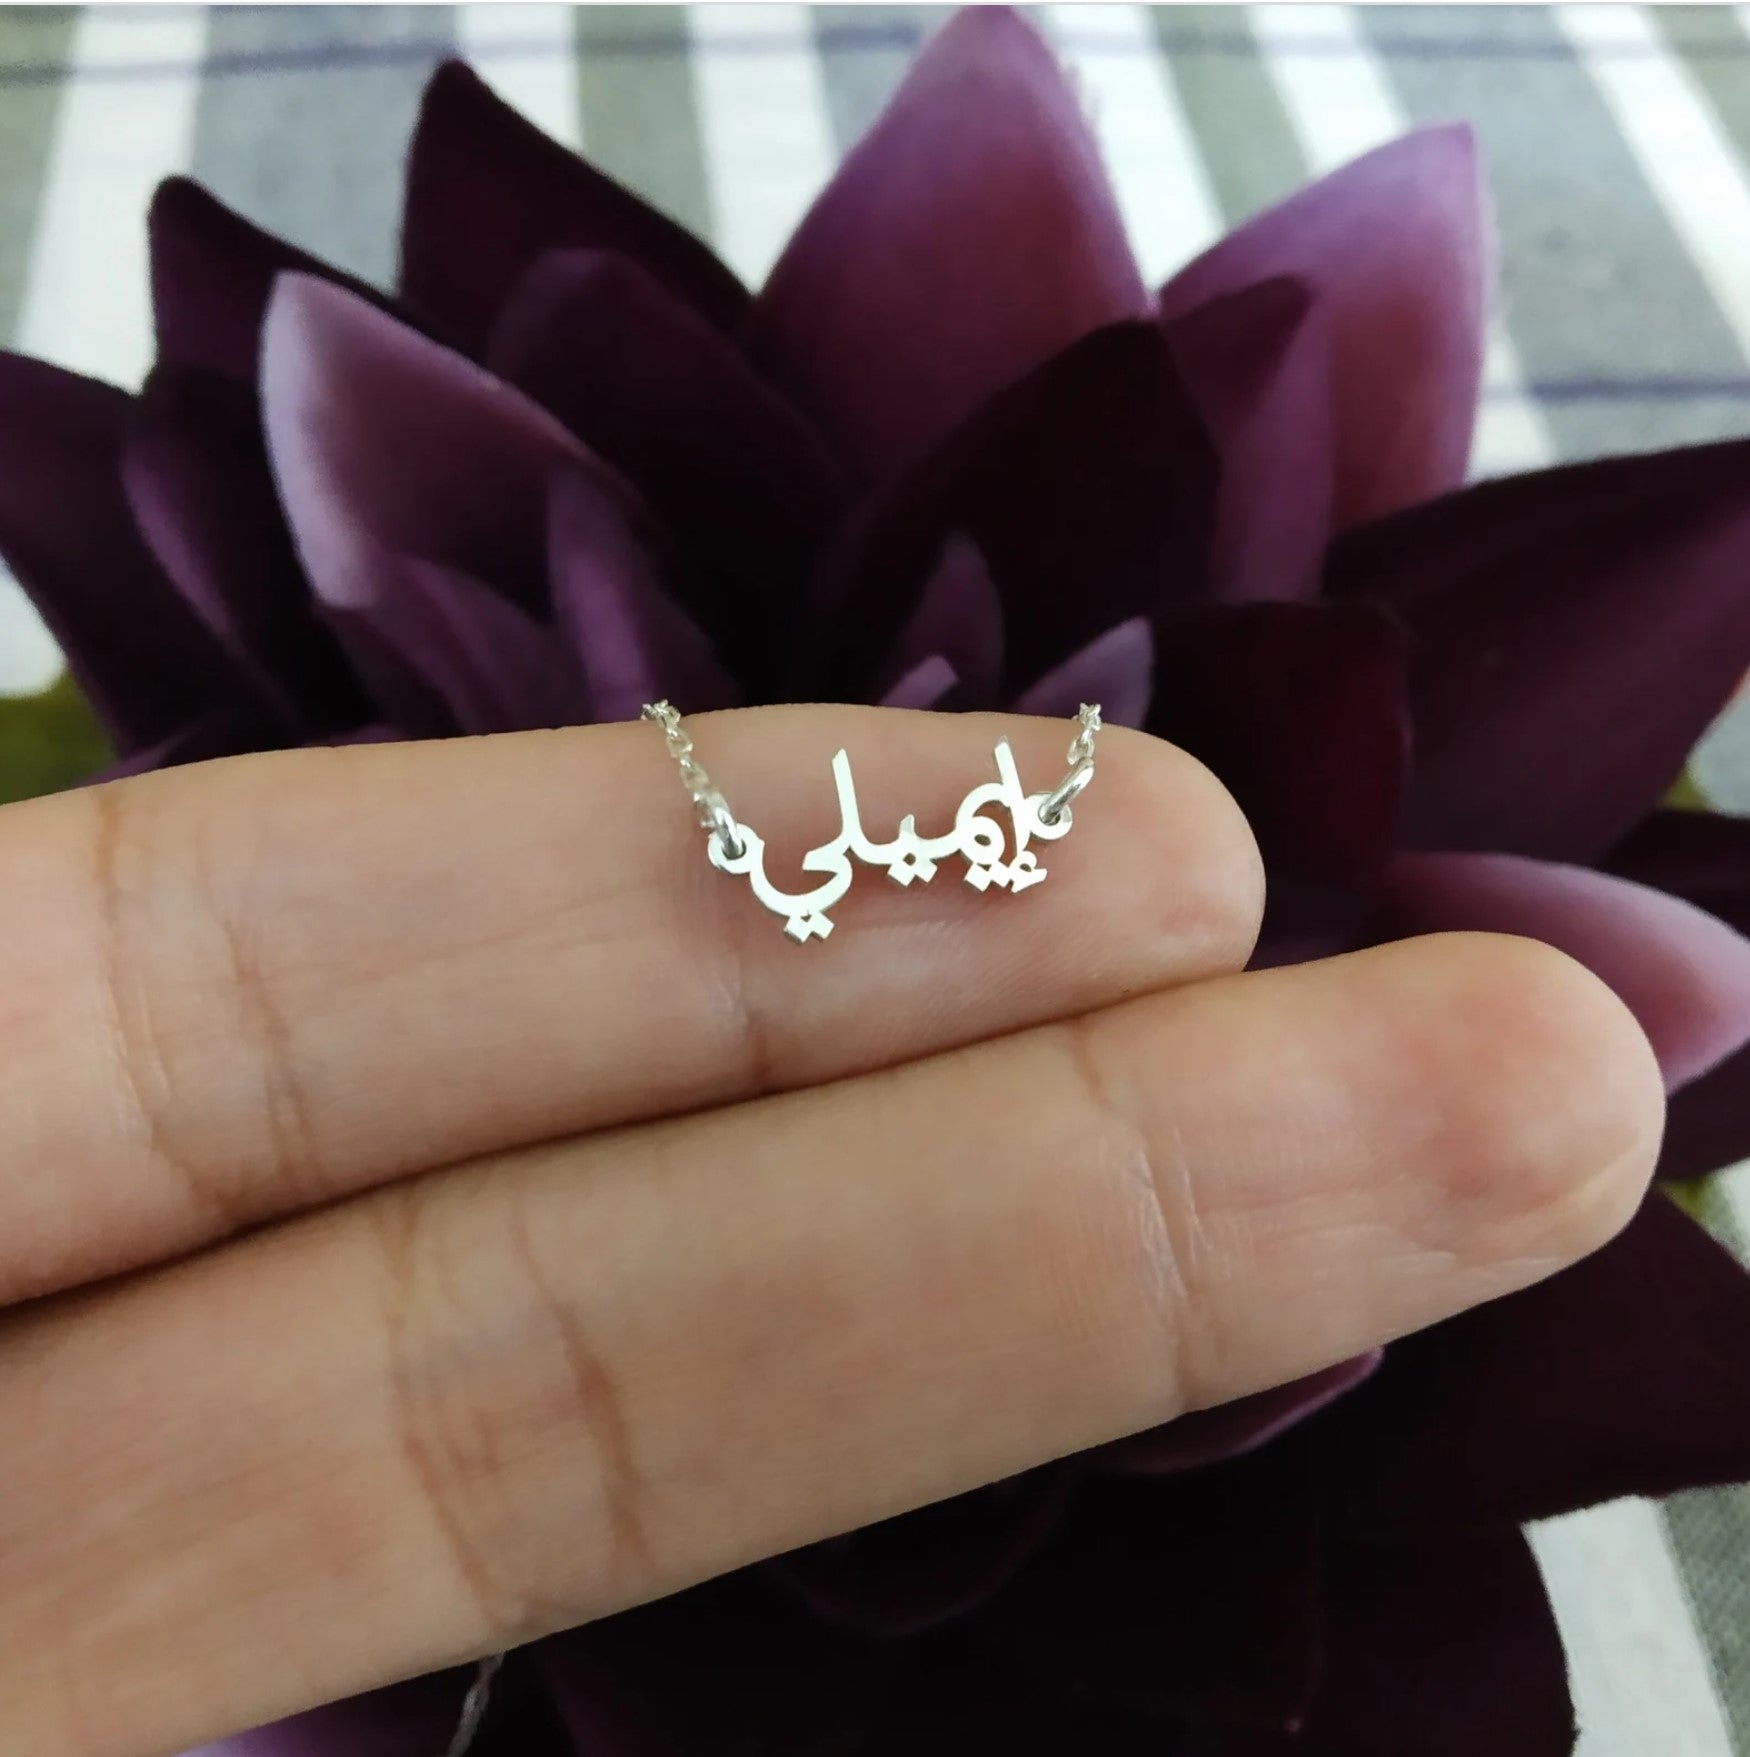 Tiny Arabic name necklace